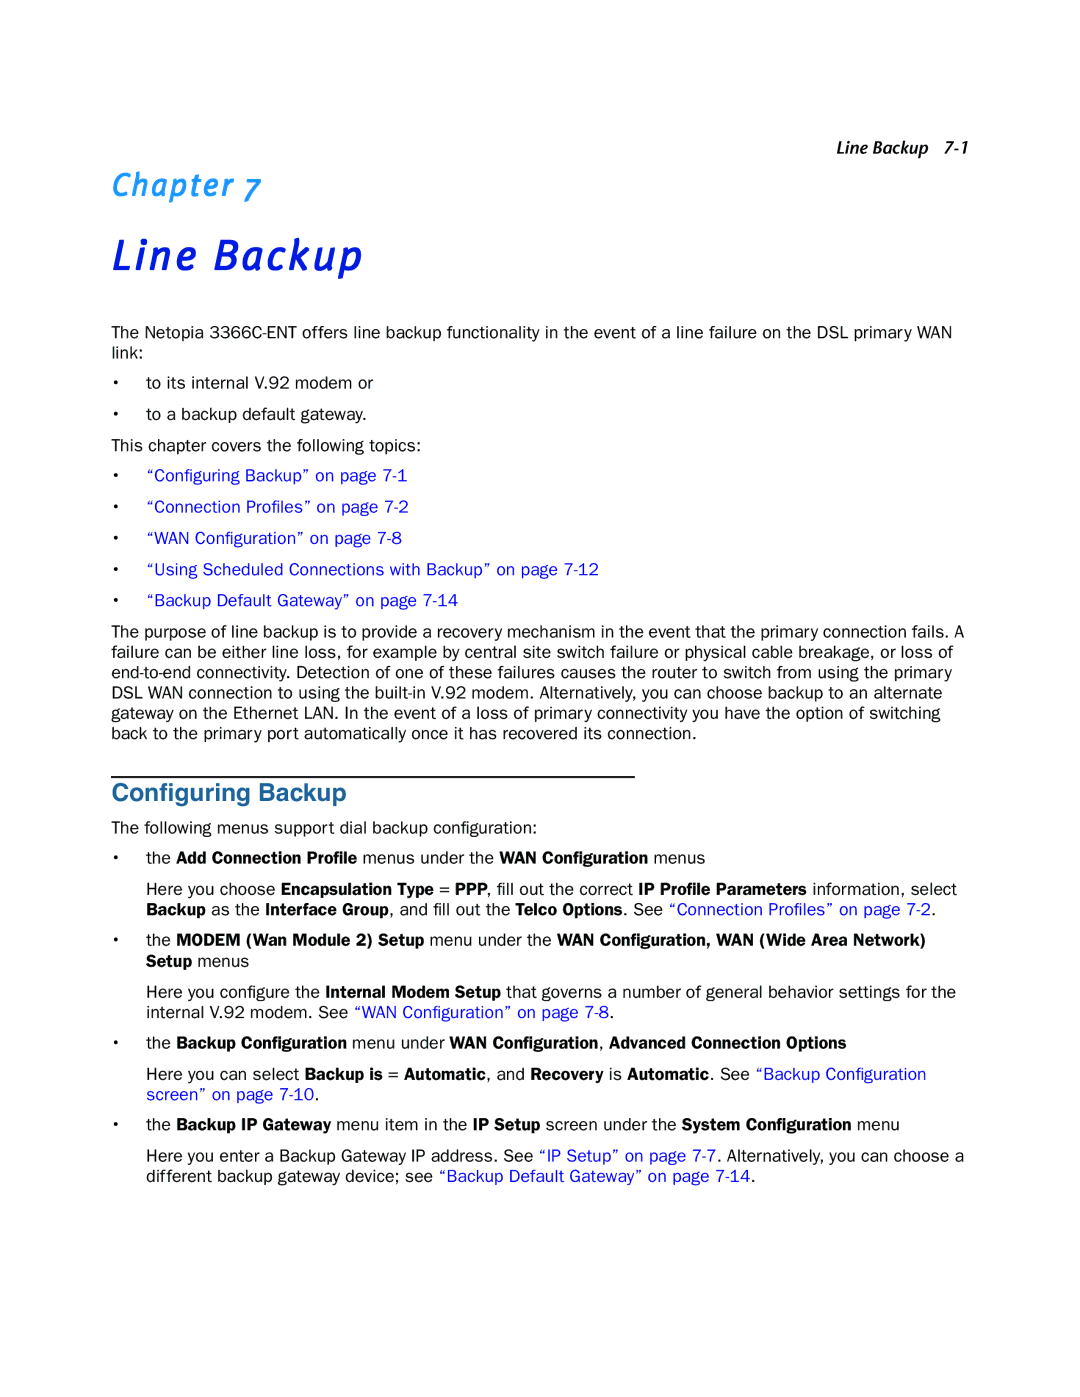 Netopia 3366C-ENT manual Line Backup, Conﬁguring Backup 